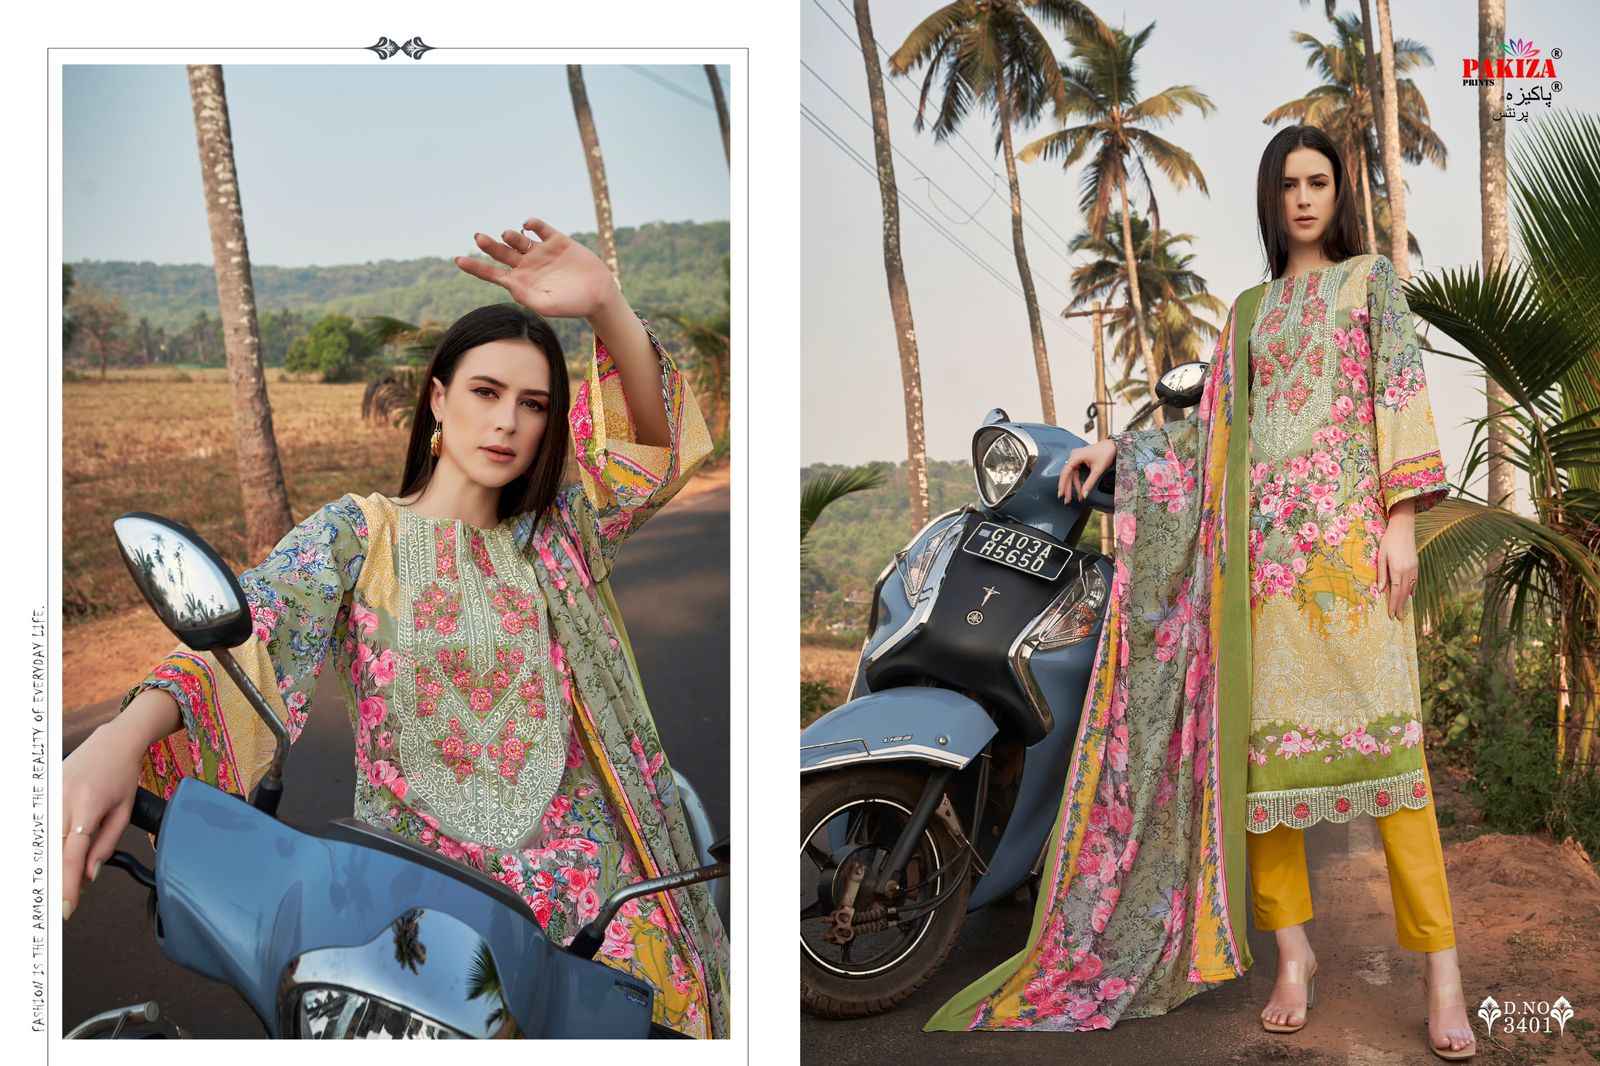 Pakiza Haniya Hiba Vol-34 Cotton Dress Material (10 pcs Catalogue)